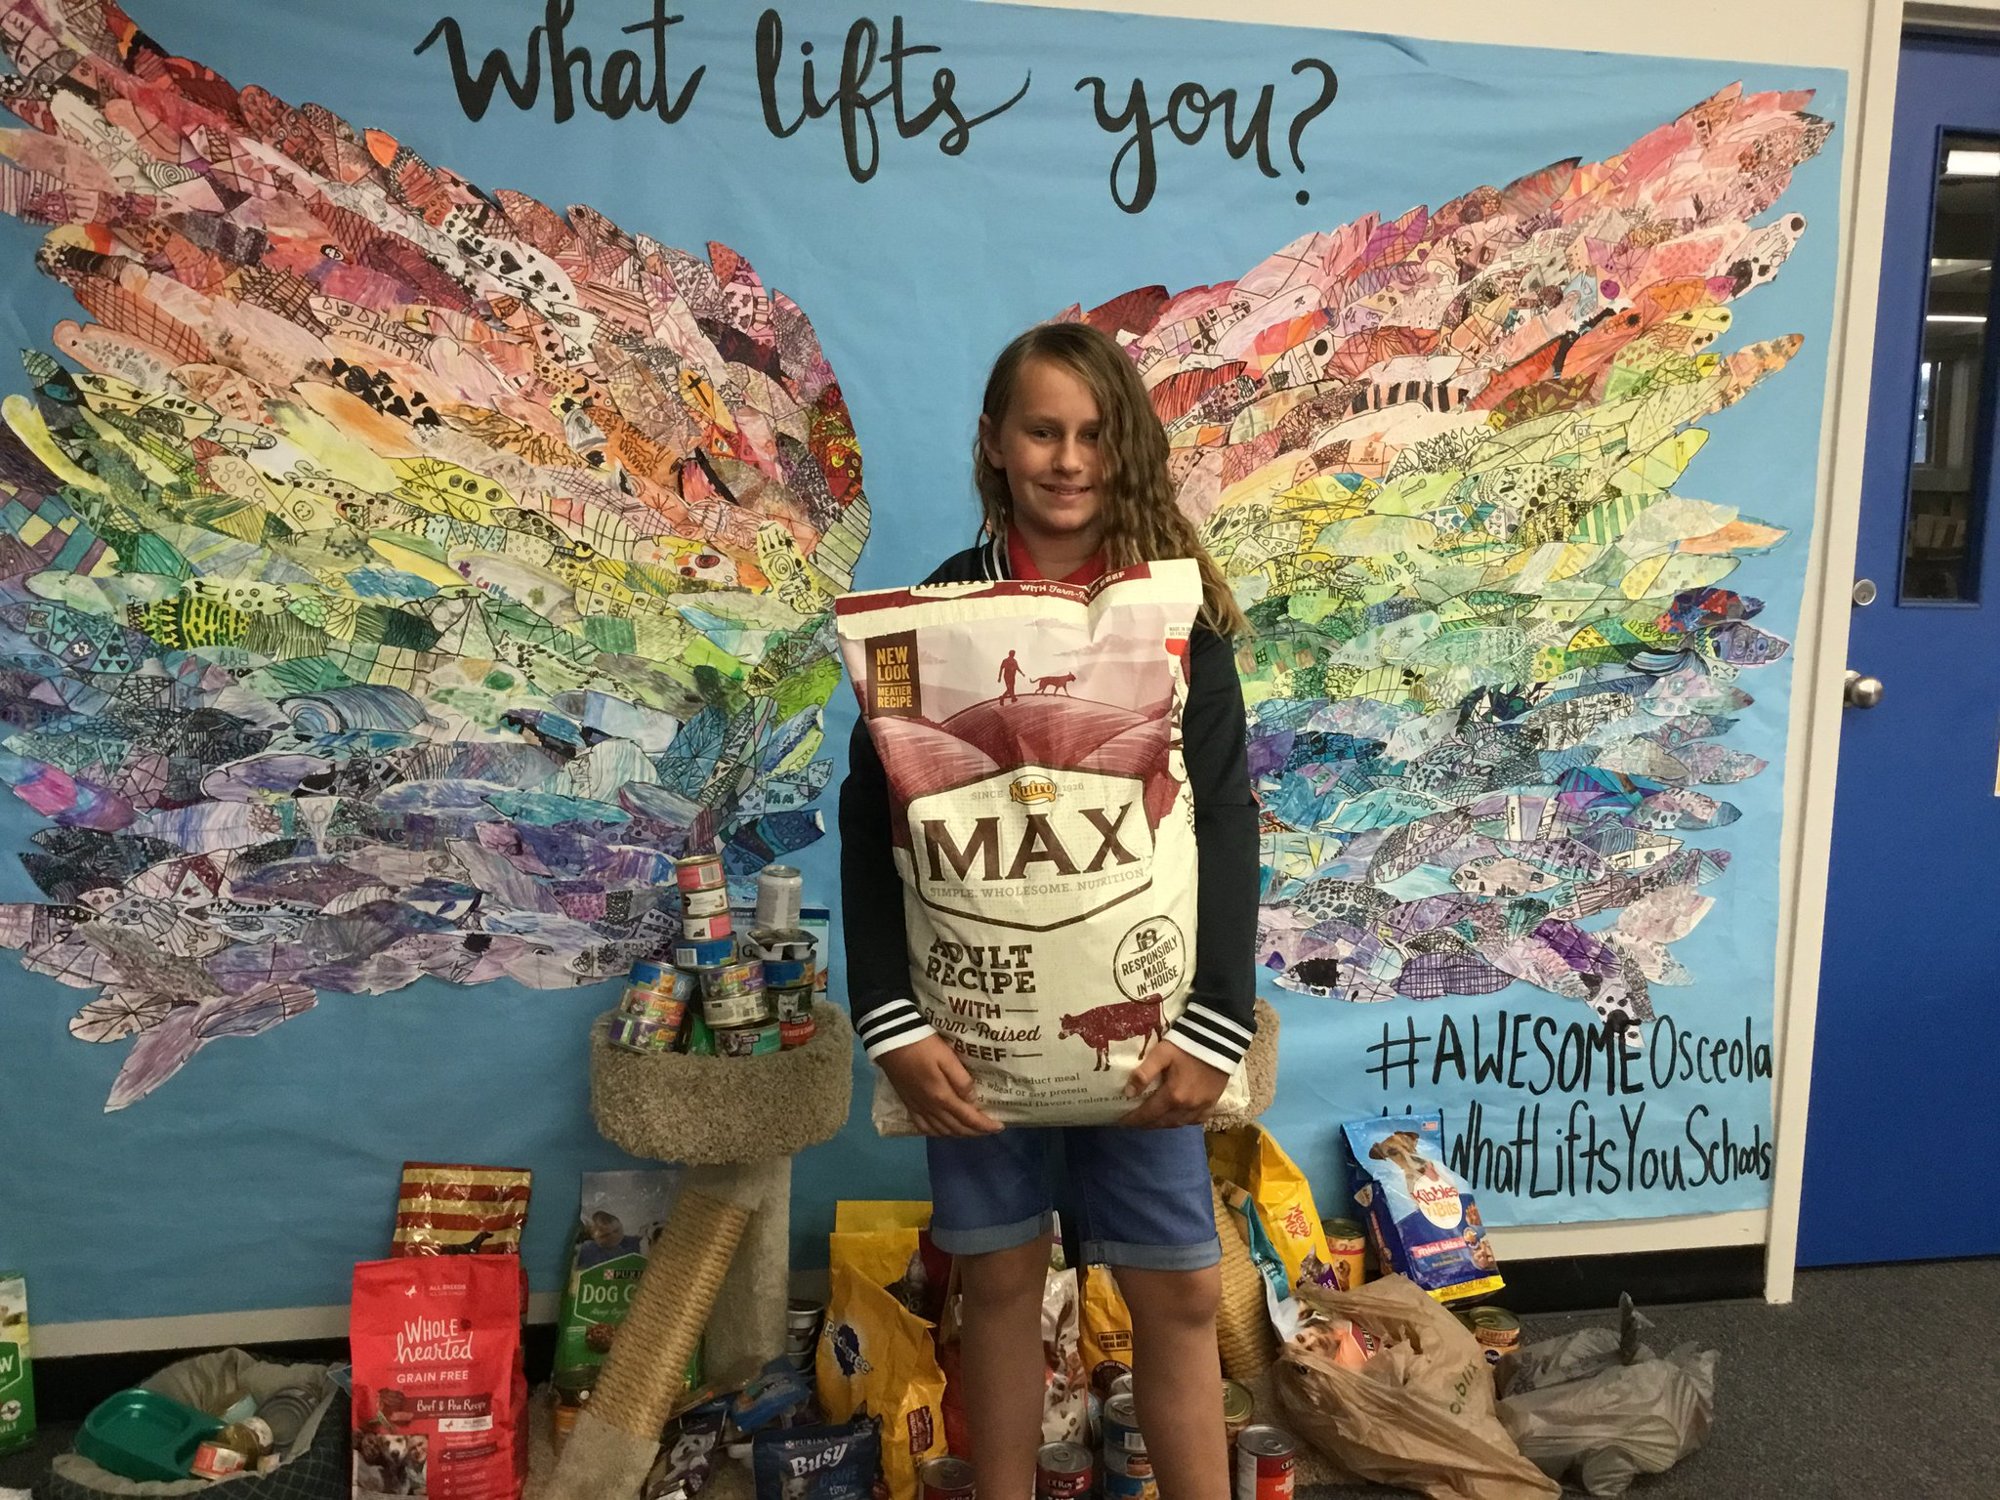 Fifth grader Gwynn Clay brings in a large bag of dog food. Photo courtesy of Jennifer Lastinger